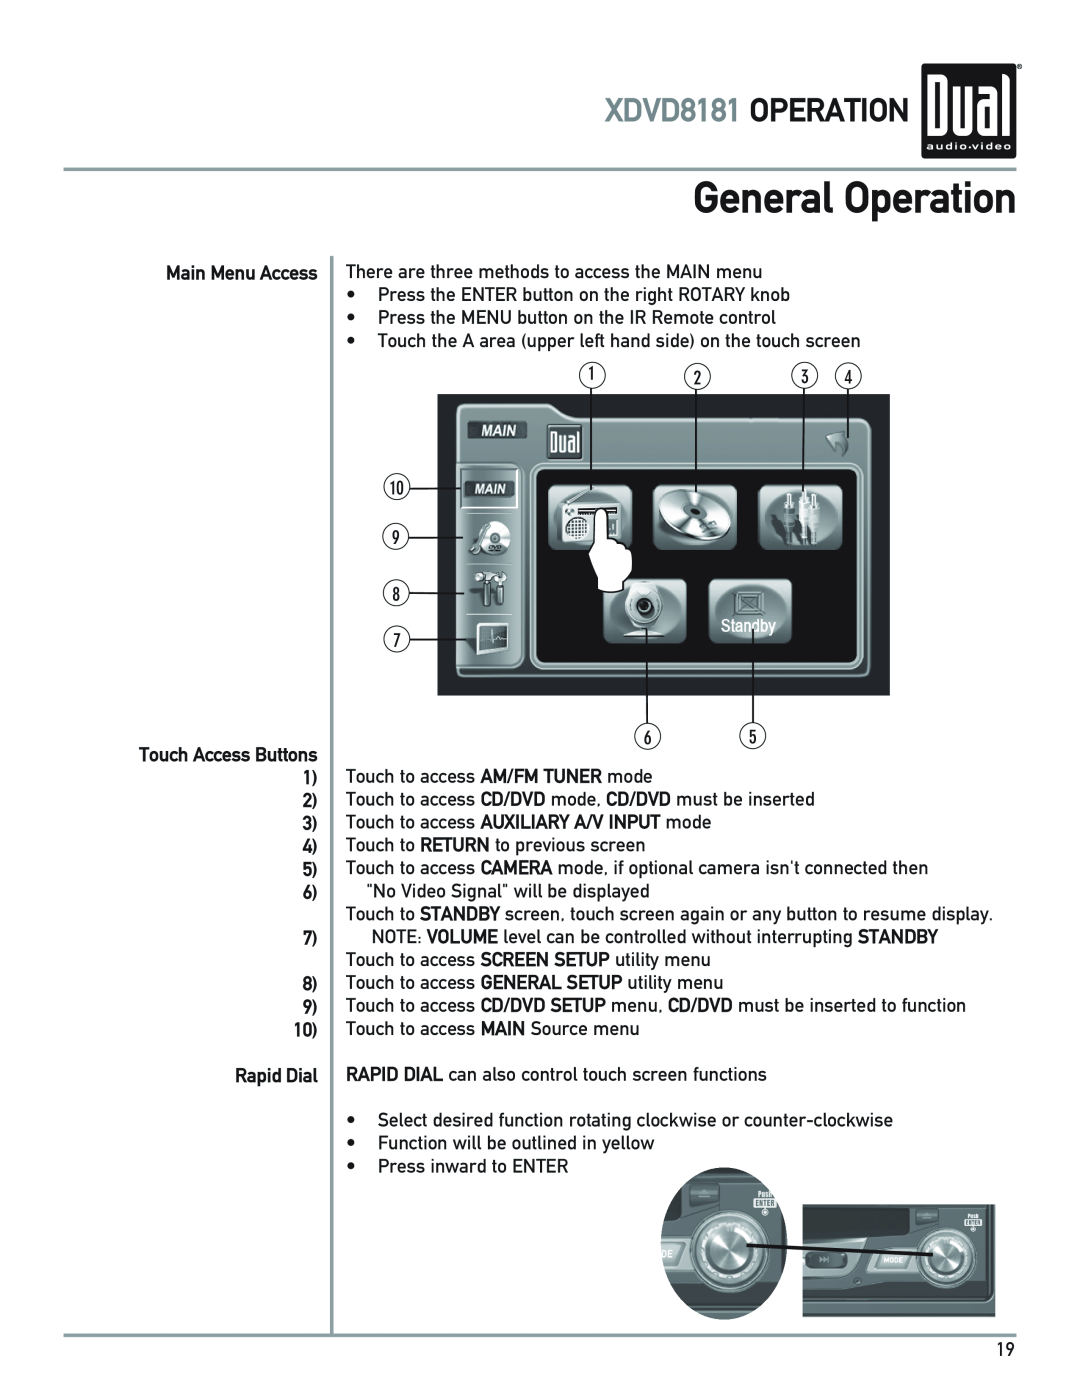 Dual owner manual General Operation, XDVD8181 OPERATION, Main Menu Access, 7 8 9 10 Rapid Dial 